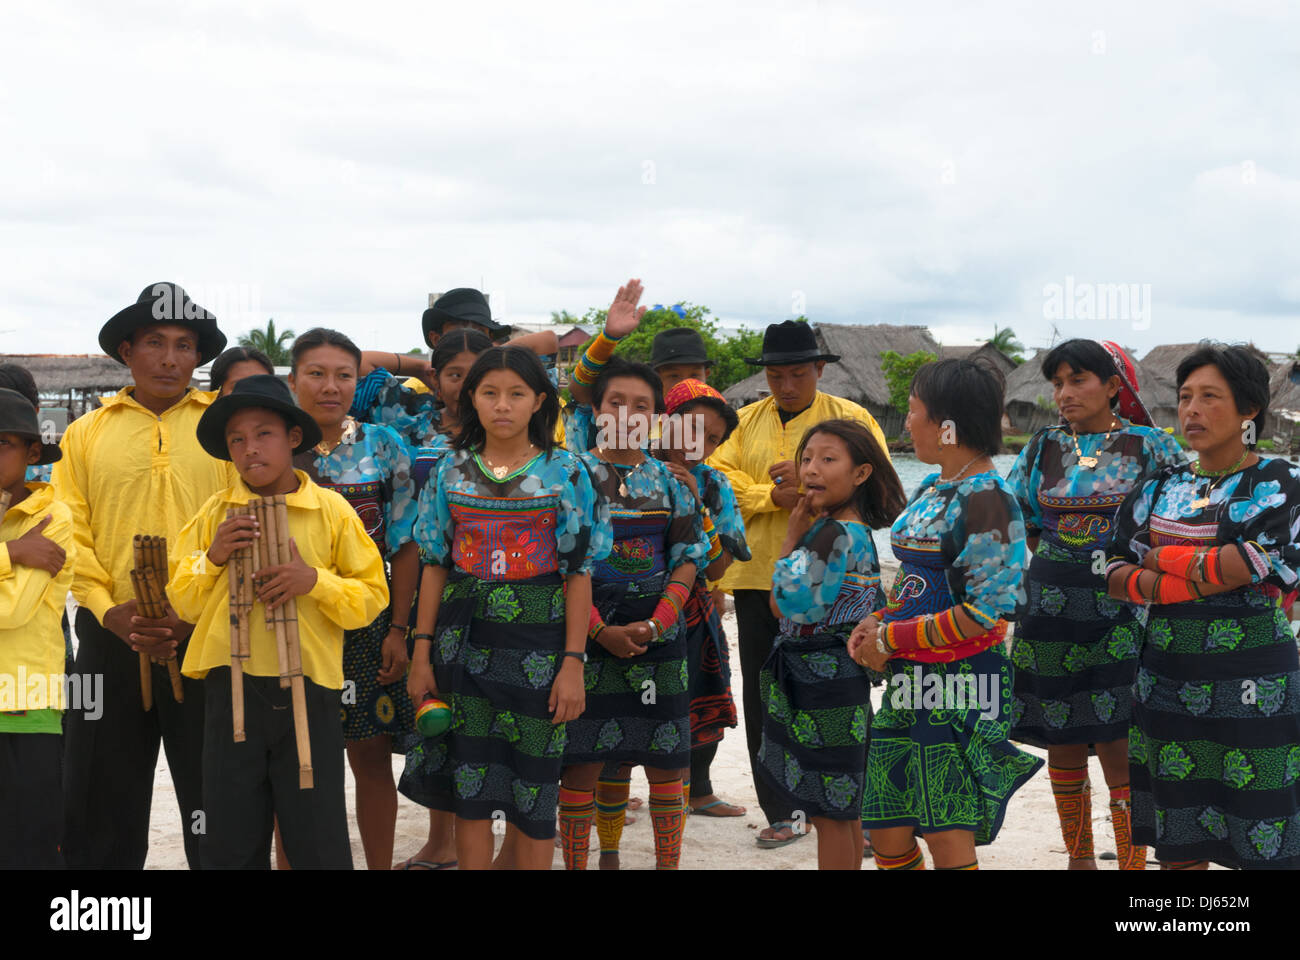 Kuna Indians off the coast of Panama Stock Photo